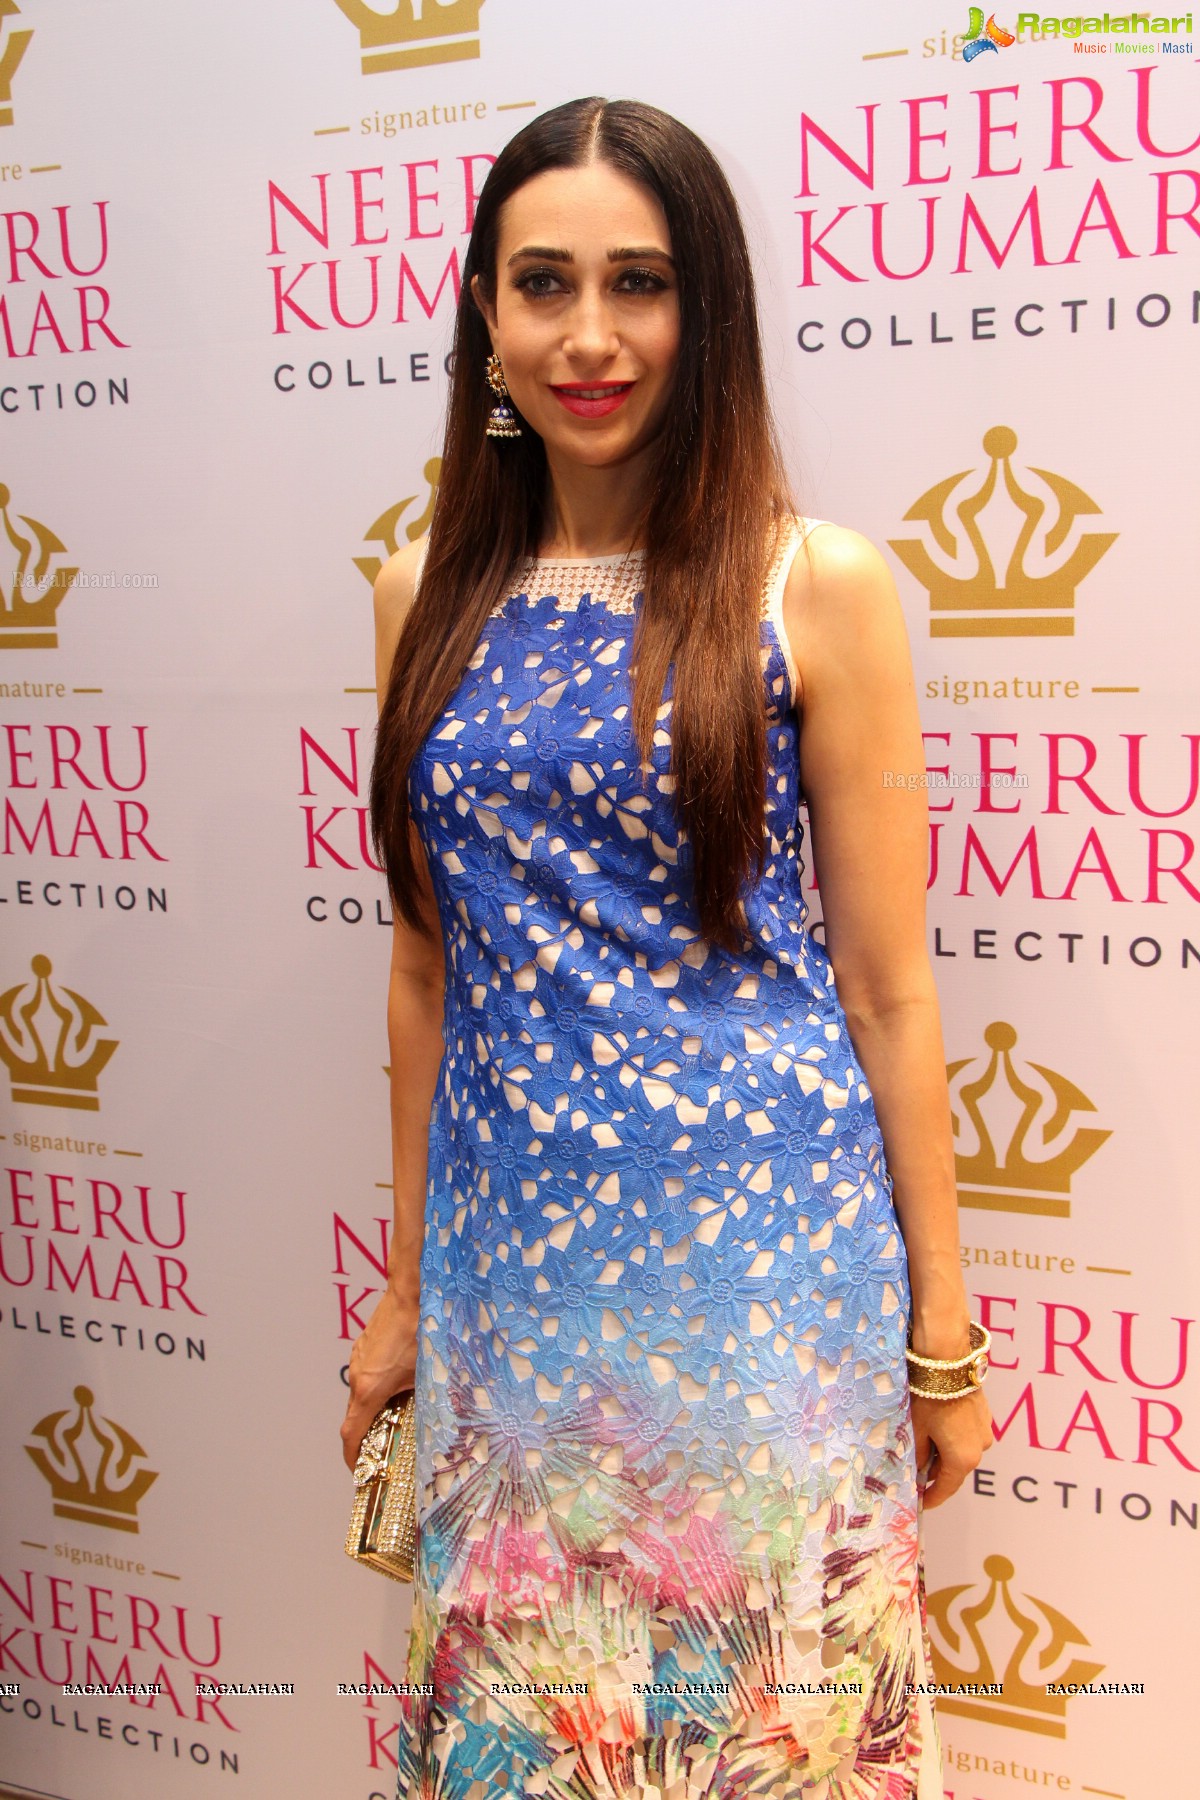 Neeru Kumar Collection Launch by Karisma Kapoor at Neeru's Emporio